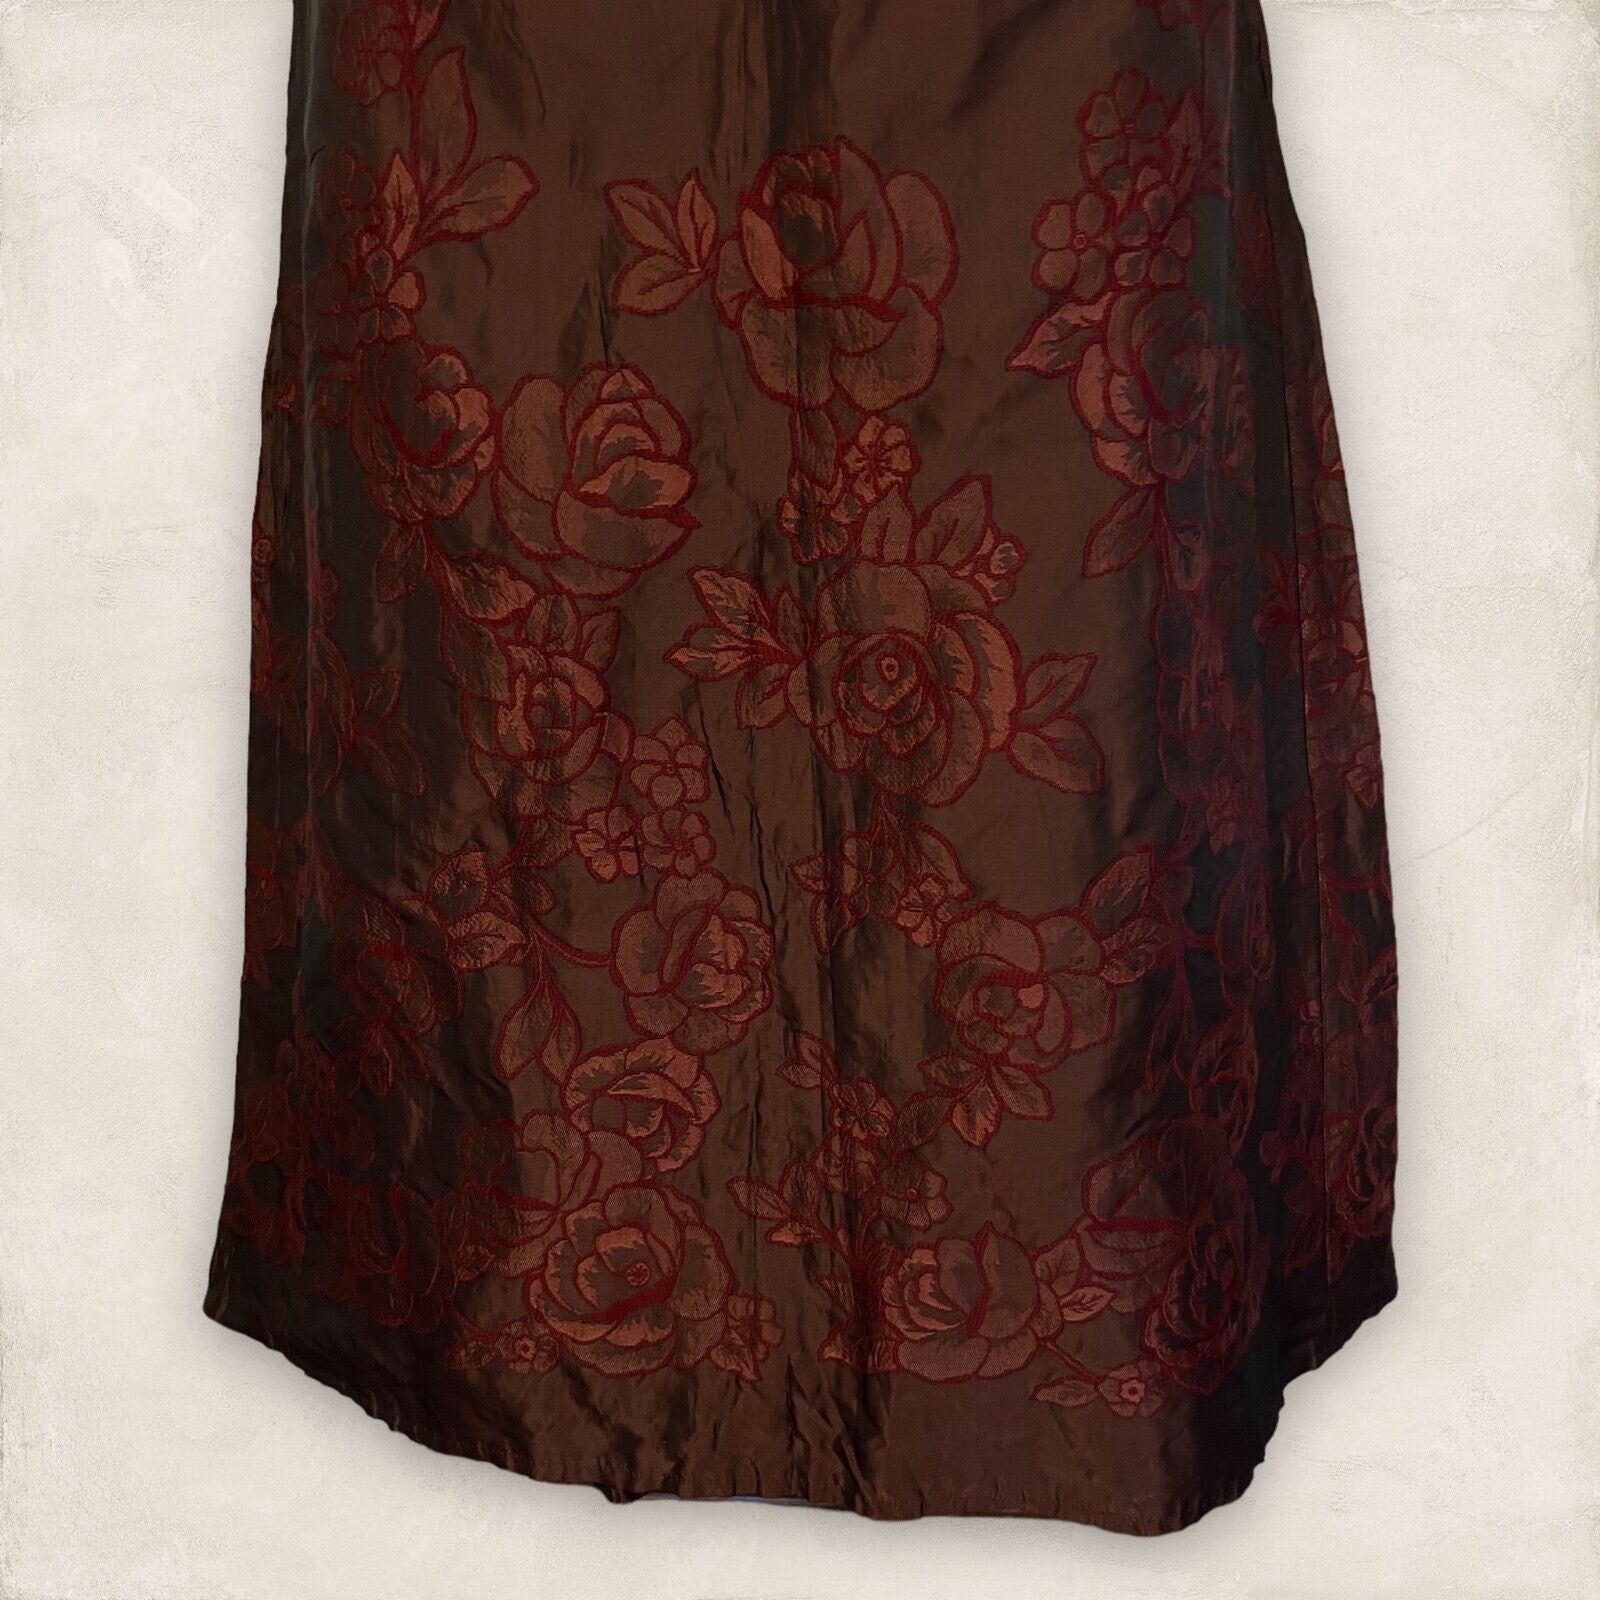 Marilyn Anselm Hobbs Claret Red Vintage Floral Metallic Long Skirt UK 8 US 4 EU 36 Timeless Fashions